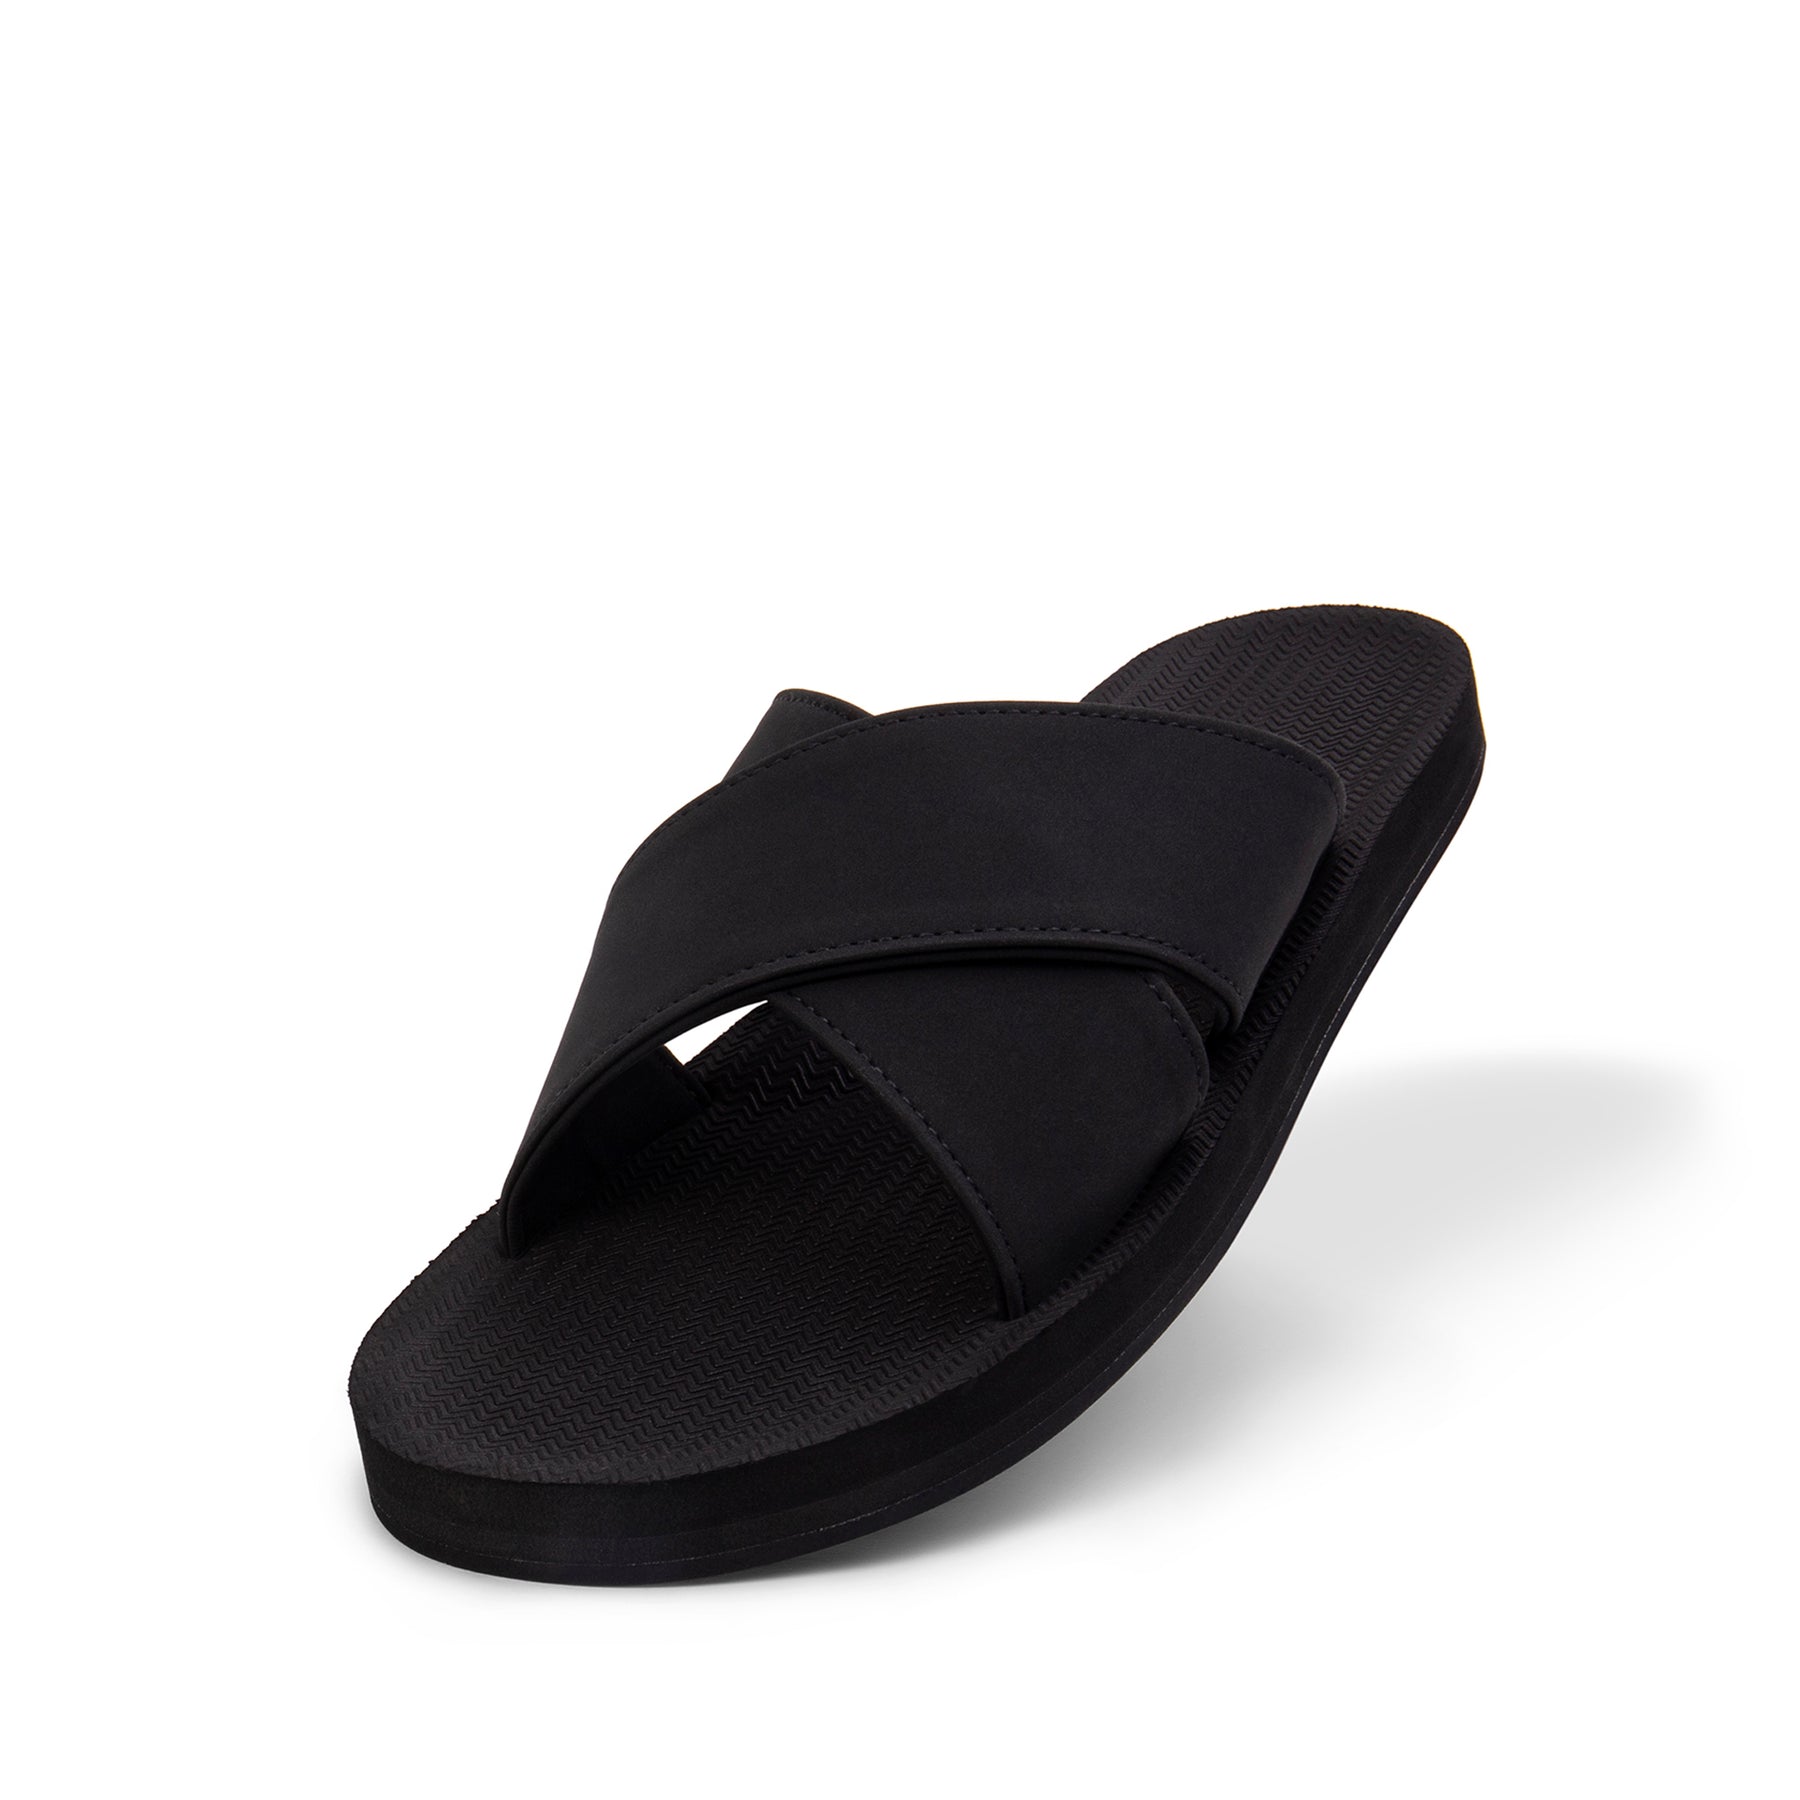 Women's Cross Sandals - Black